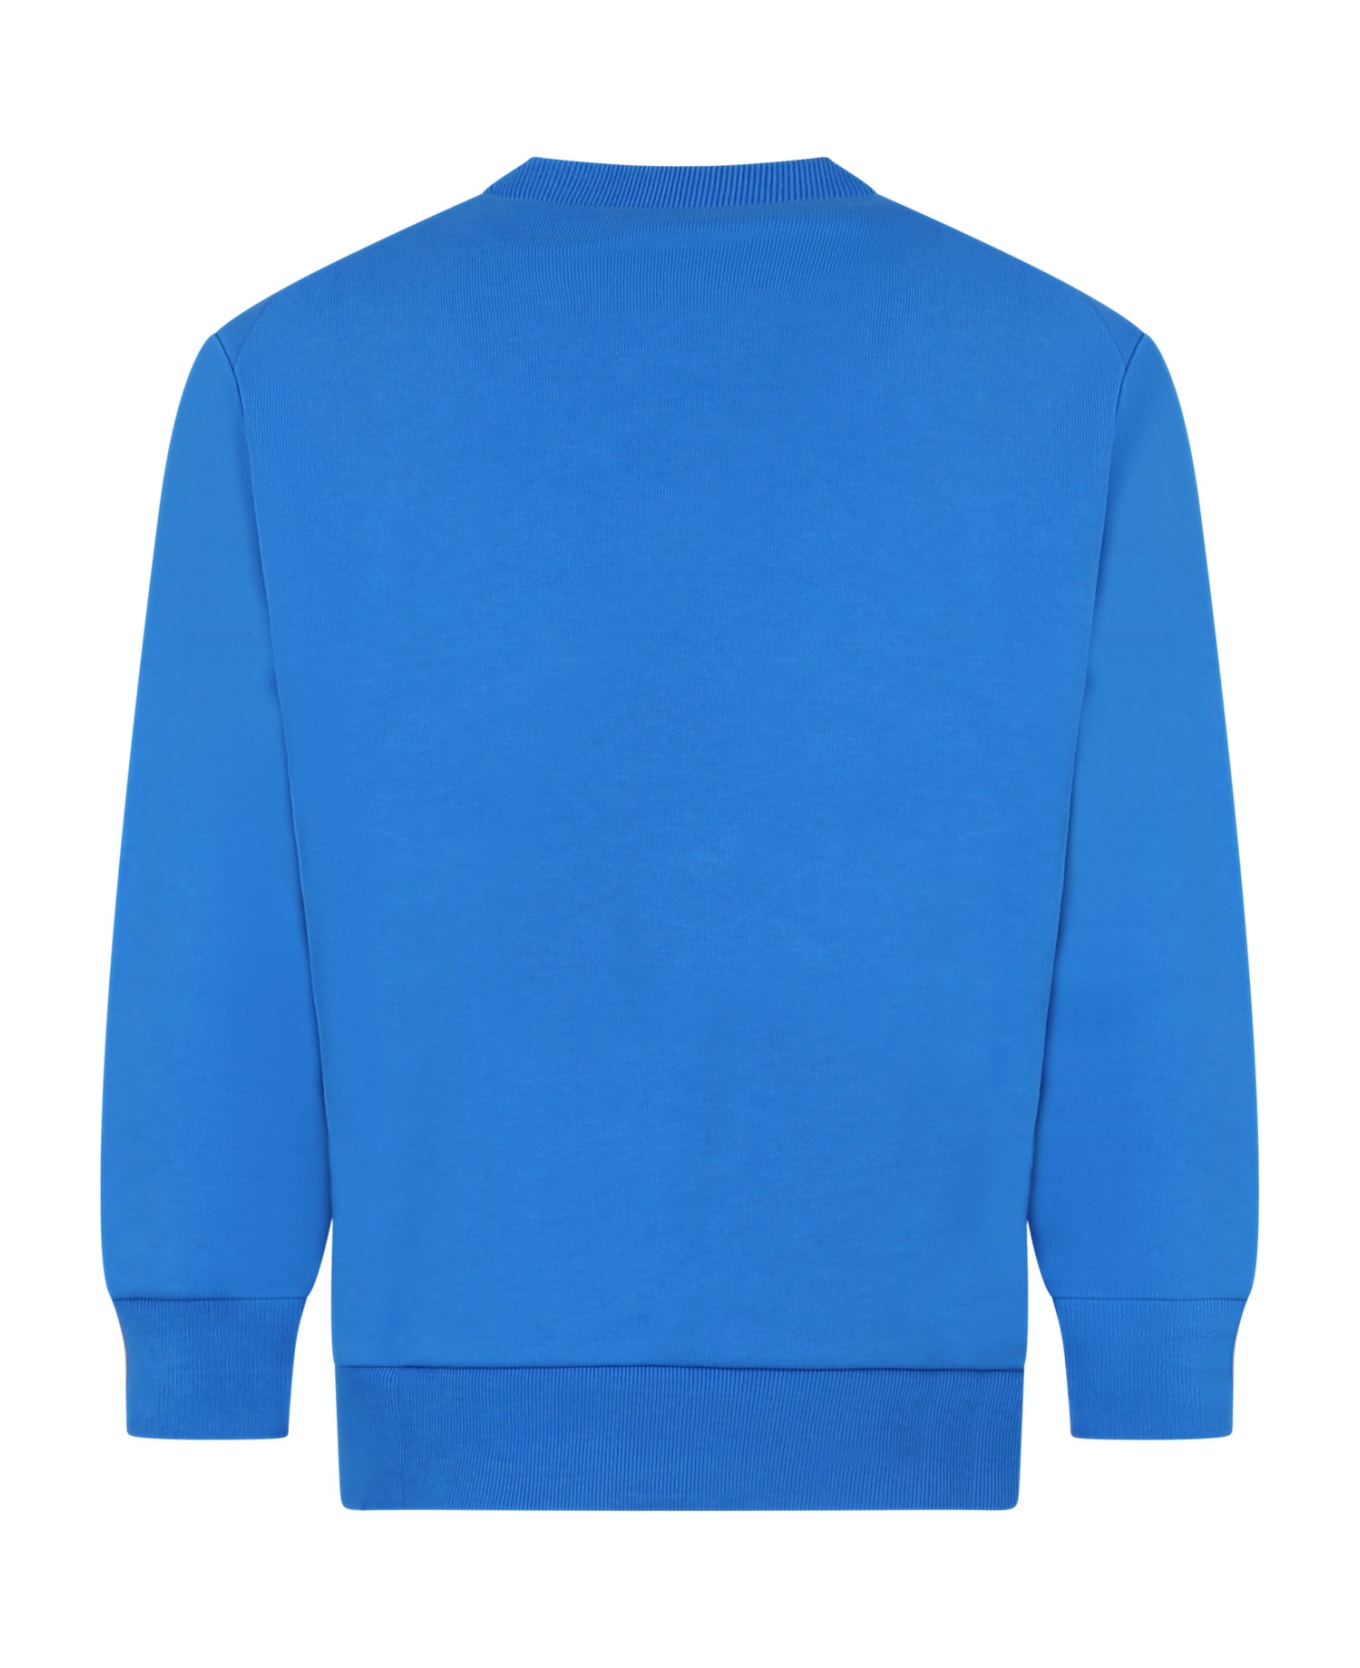 Marni Blue Sweatshirt For T-shirt With Logo - Blue